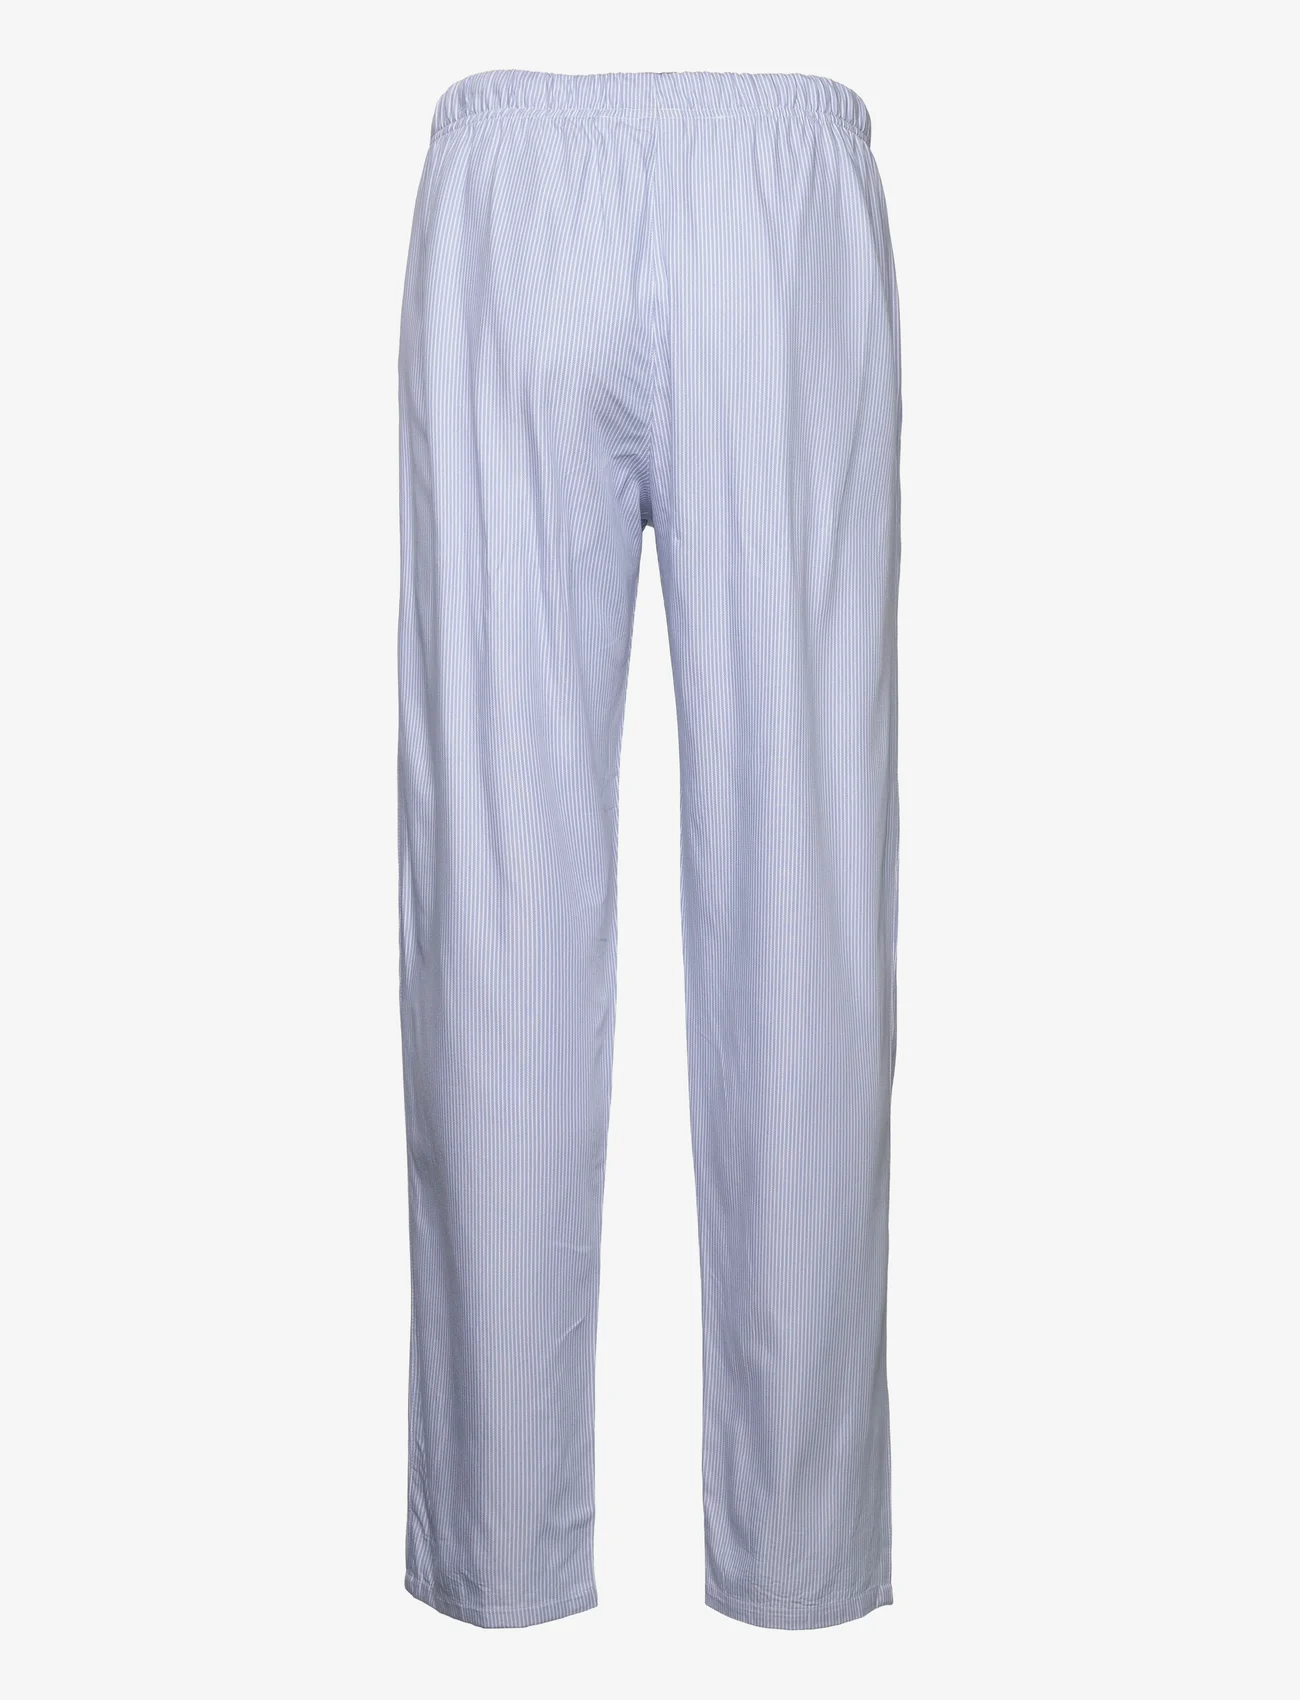 JBS of Denmark - JBS of DK PJ Pant - pyjama bottoms - blue - 1